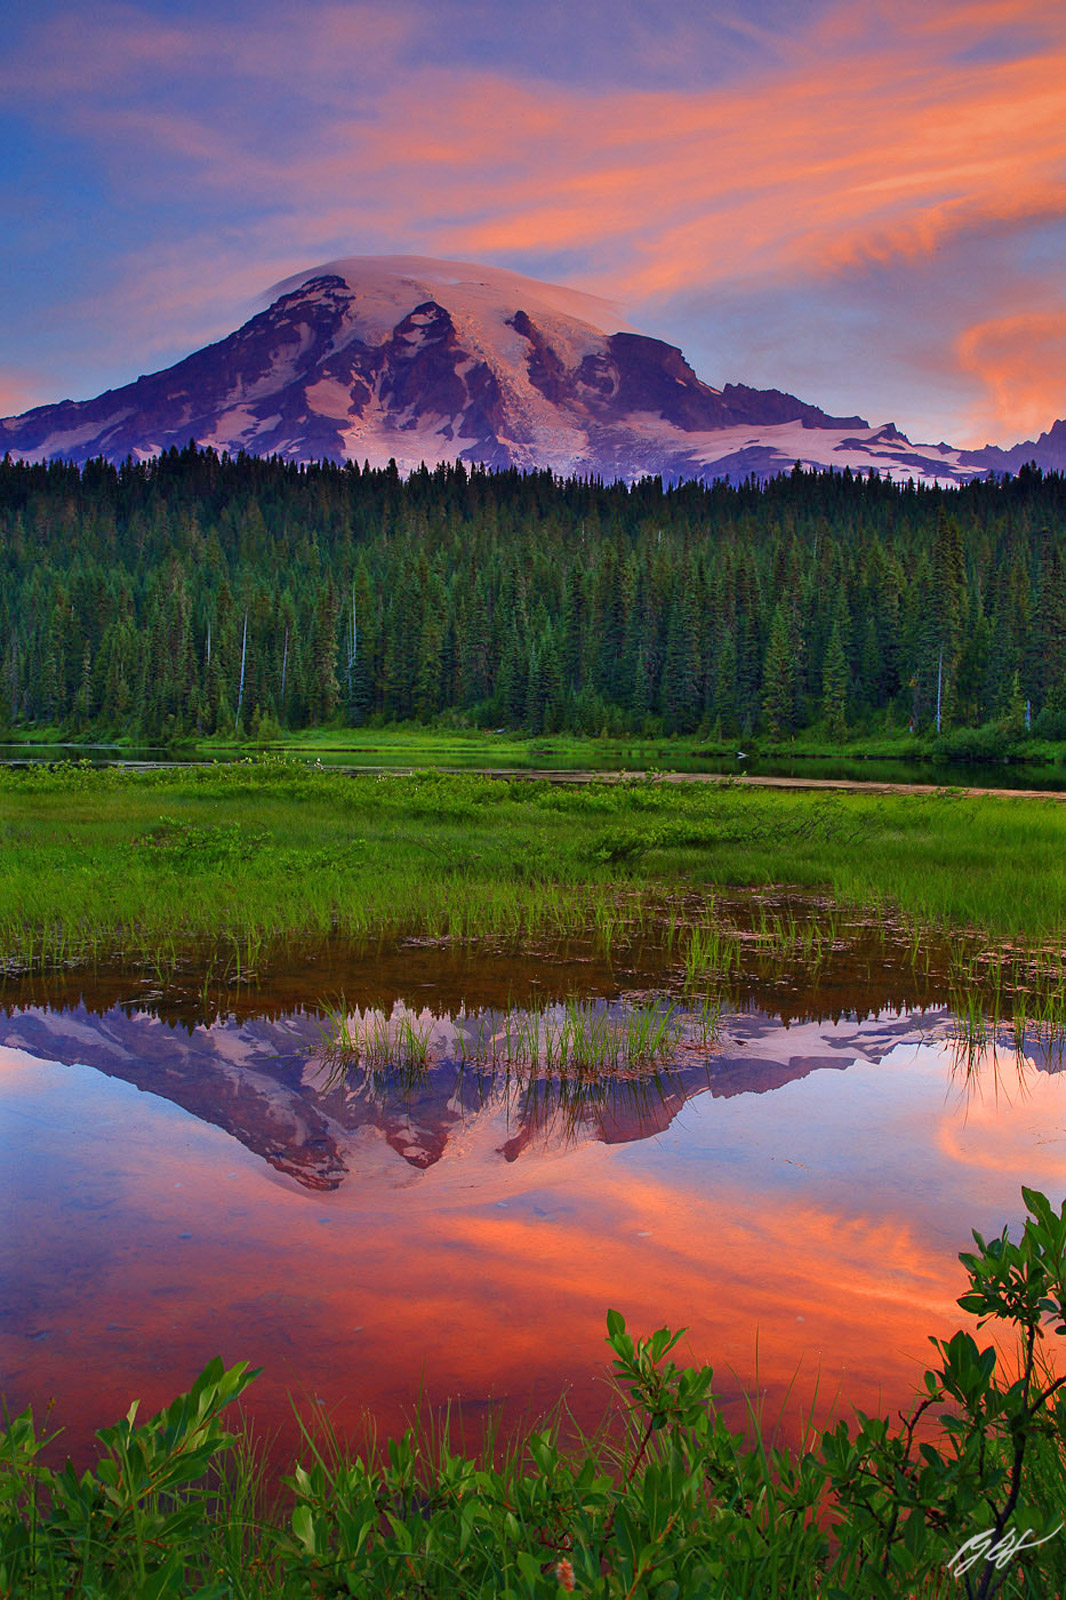 Sunrise Mt Rainier Reflected in Reflection Lakes, Mt Rainier National Park in Washington